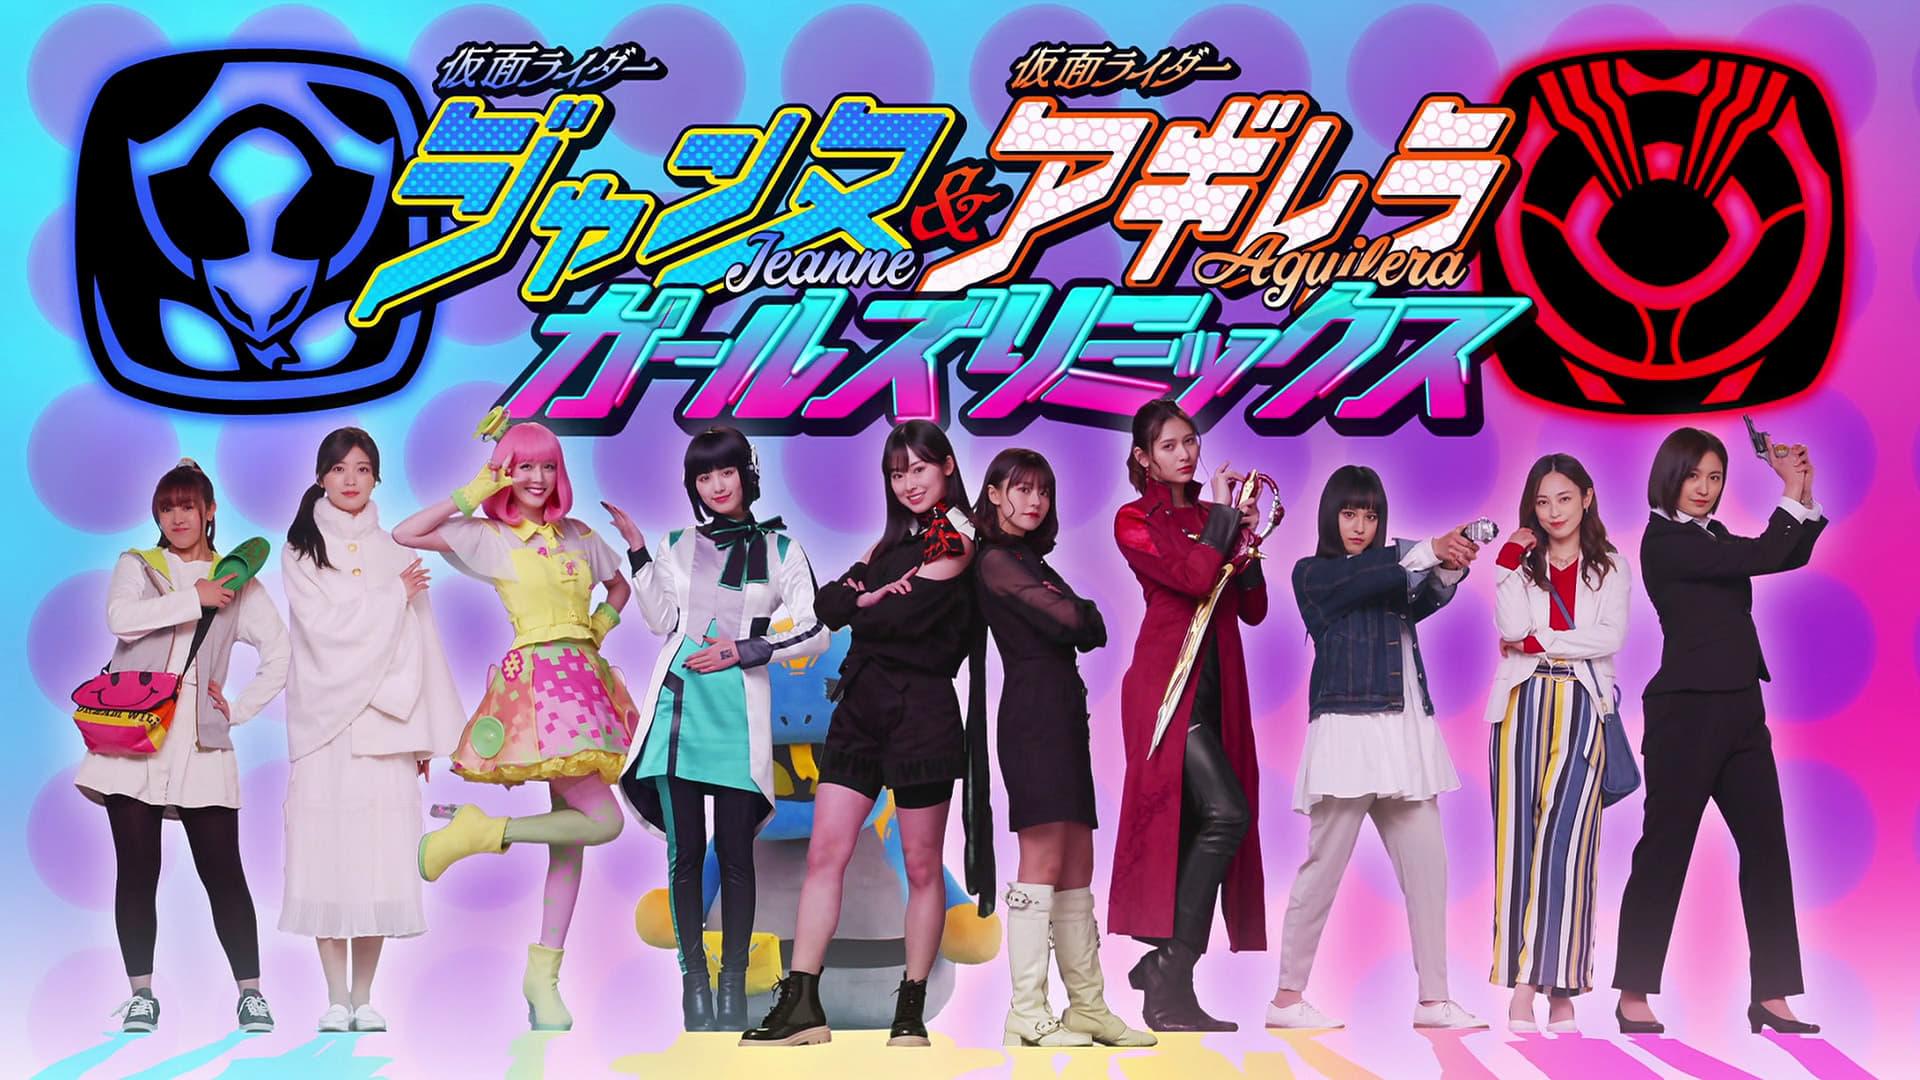 Kamen Rider Jeanne & Kamen Rider Aguilera with Girls Remix backdrop